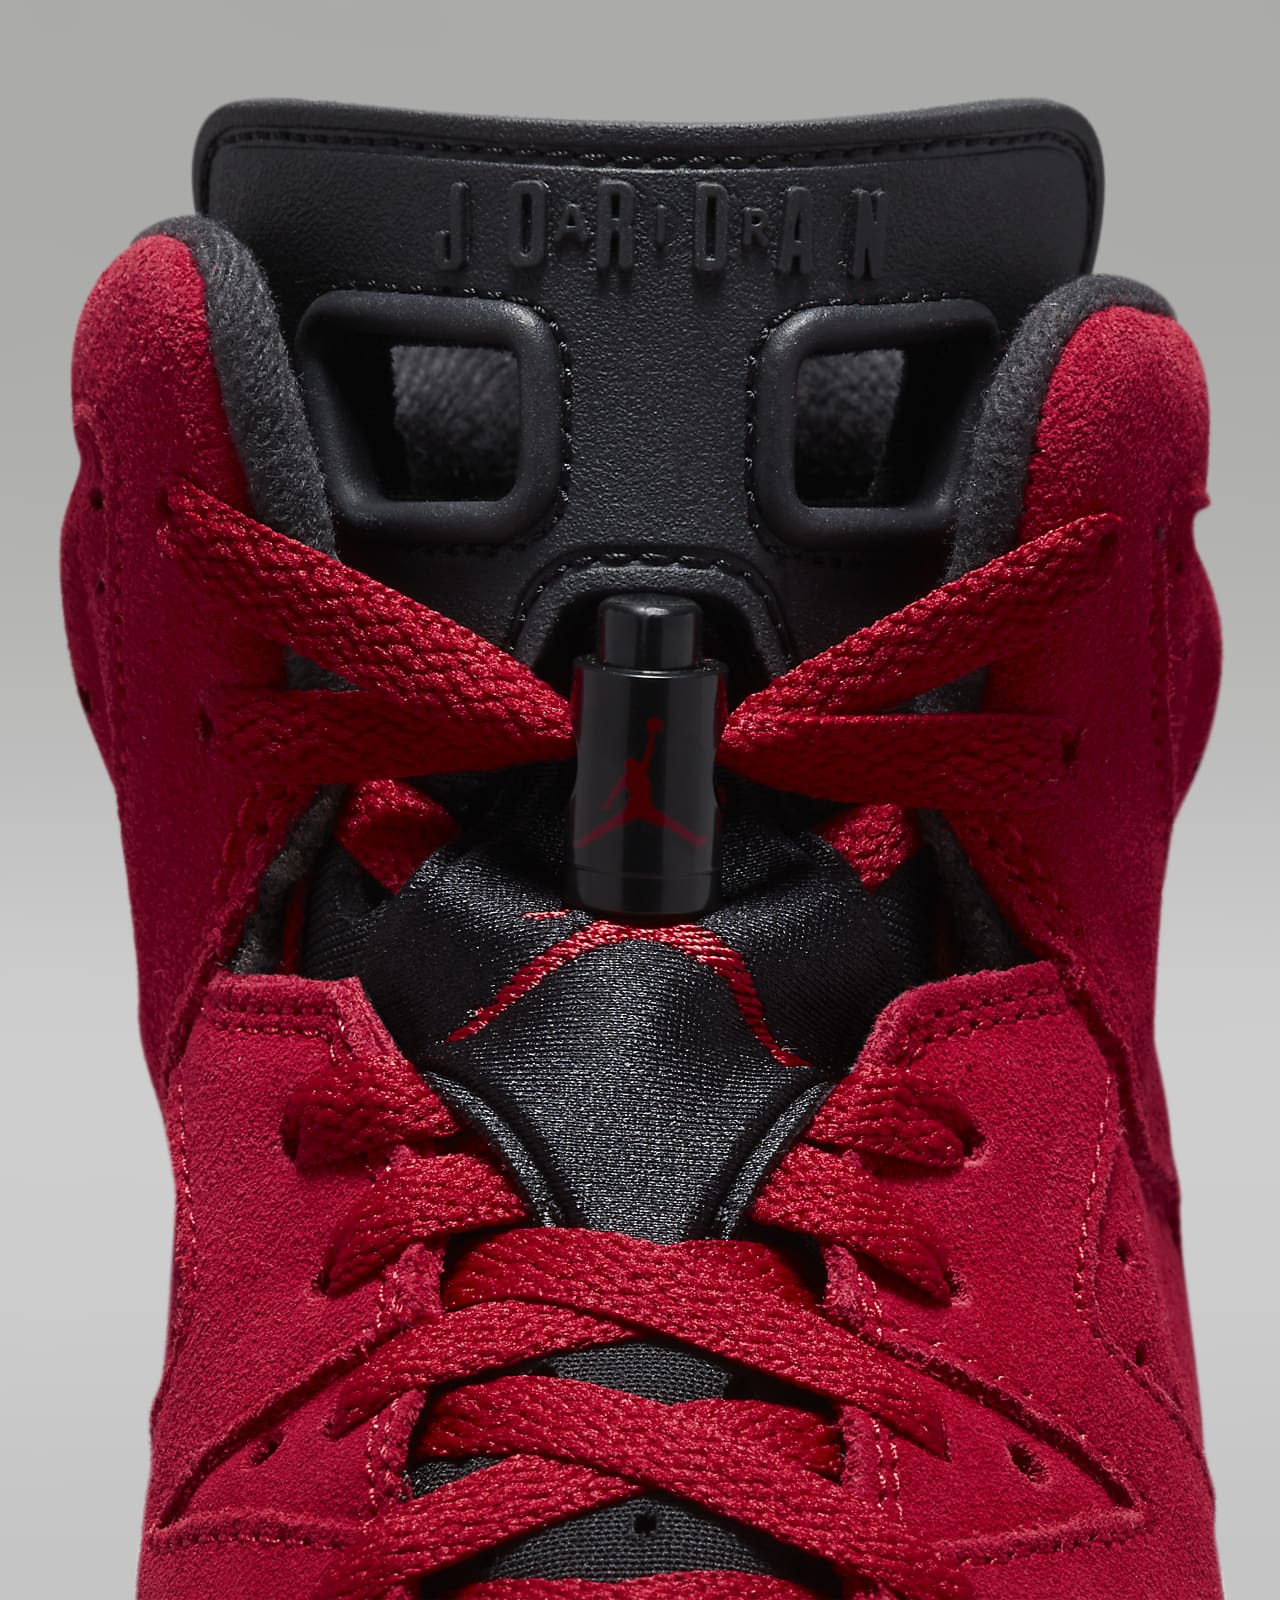  Nike Kids Air Jordan 4 Retro Basketball Shoe (6)